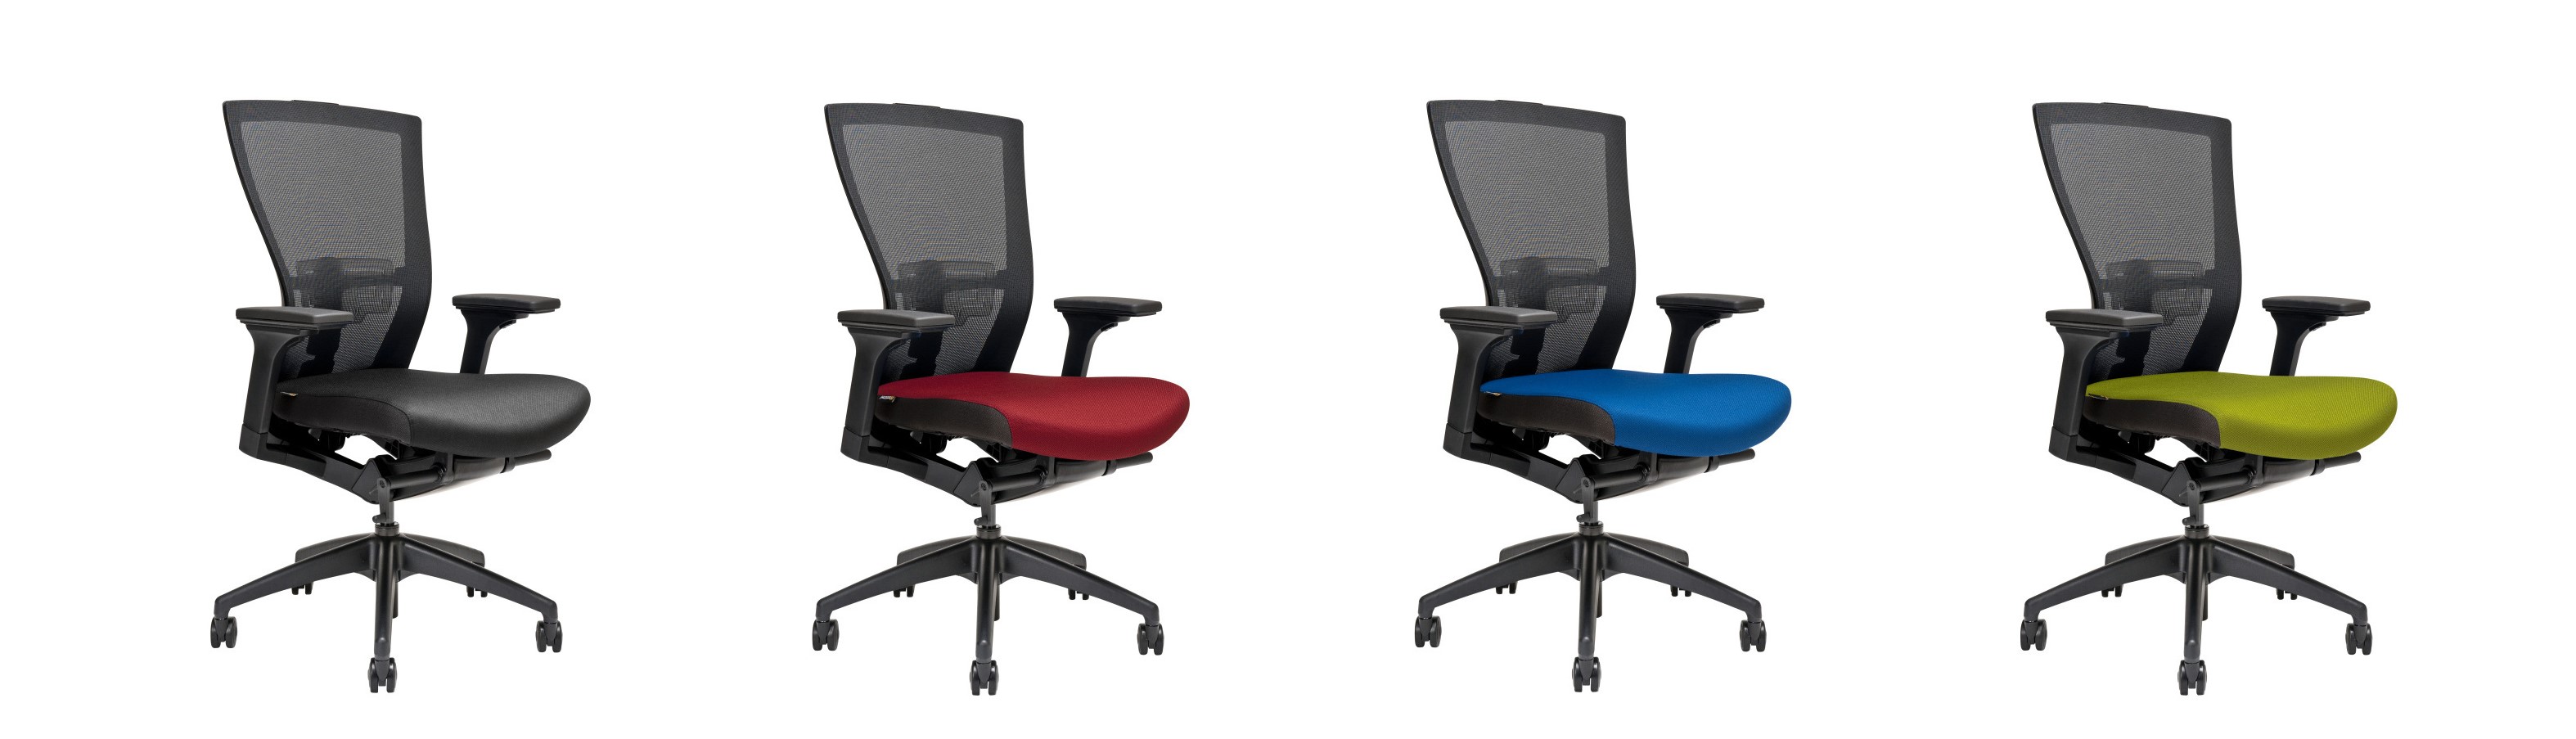 ergonomicka-kancelarska-zidle-officepro-merens-bp-vsechny-barvy